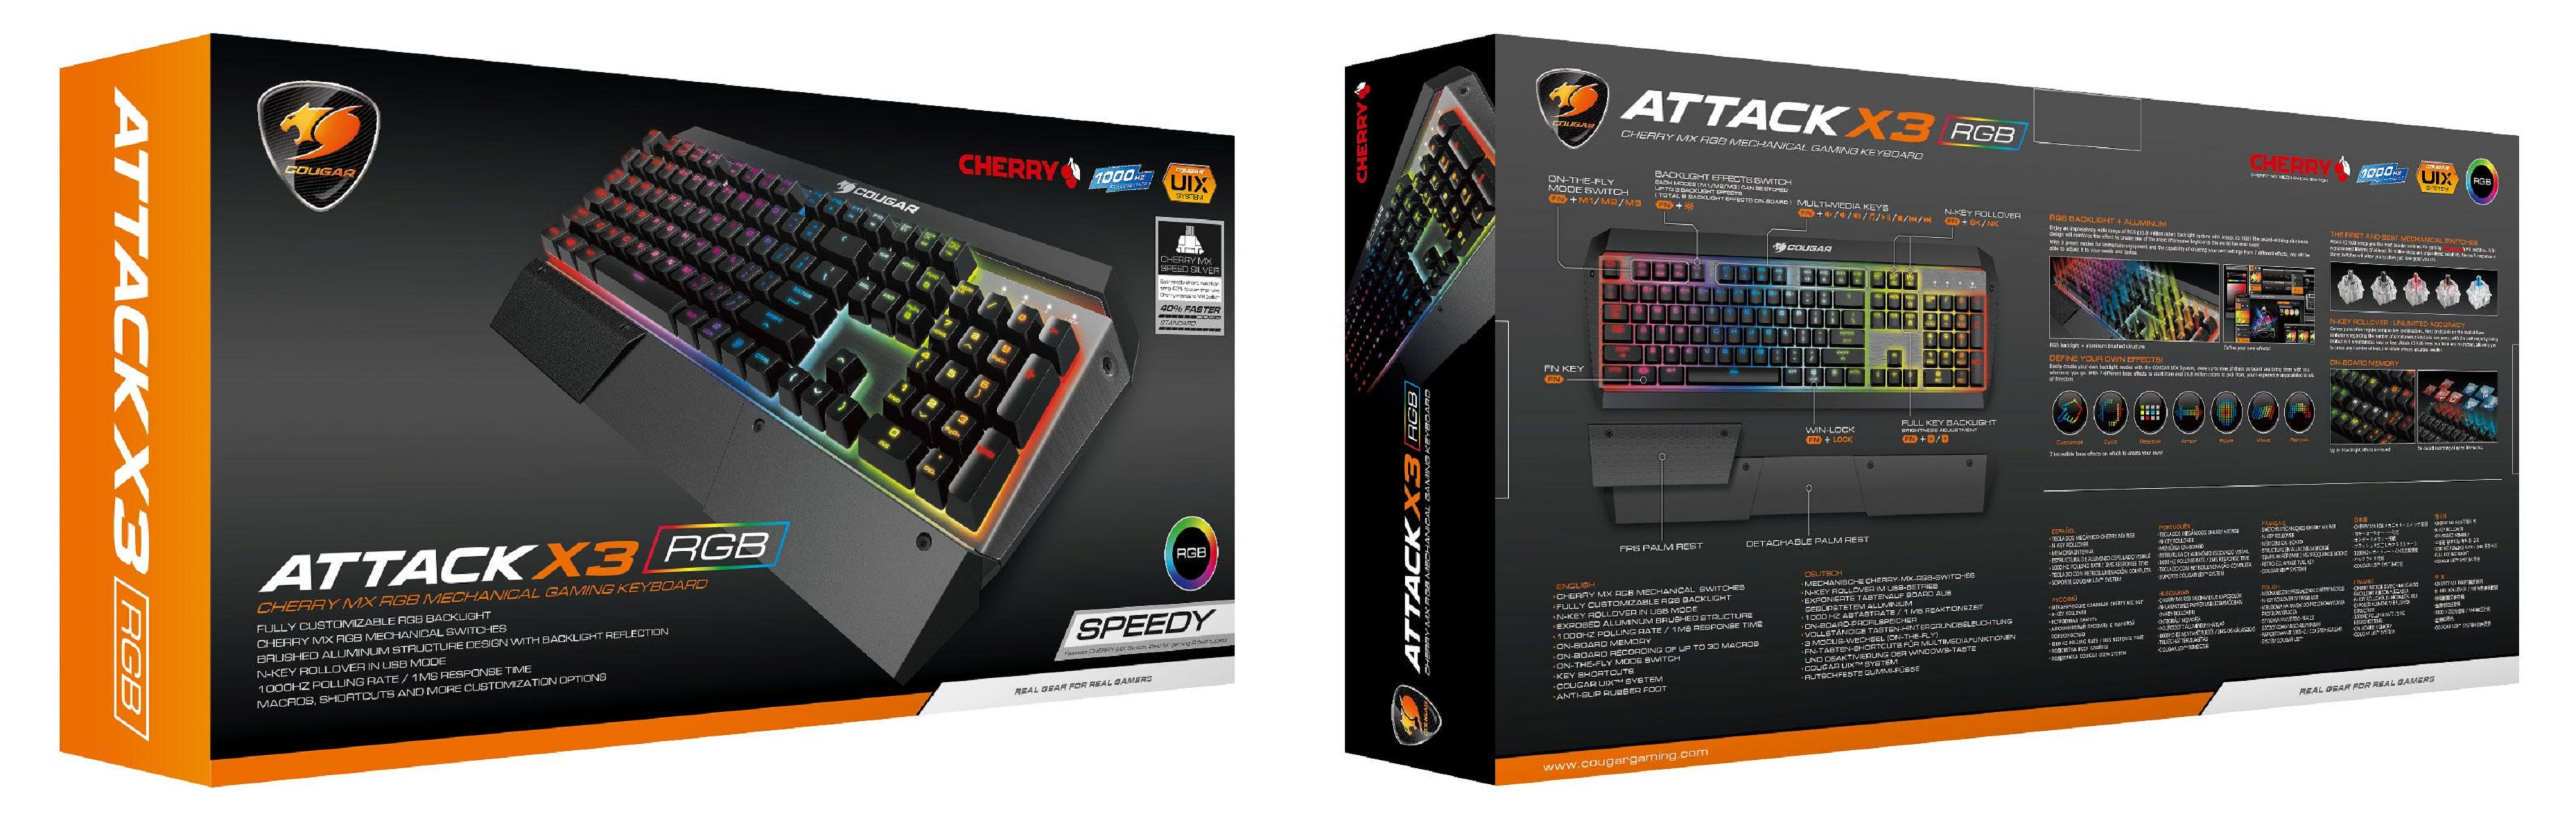 COUGAR Attack X3 RGB Cherry MX, Tastatur Gaming